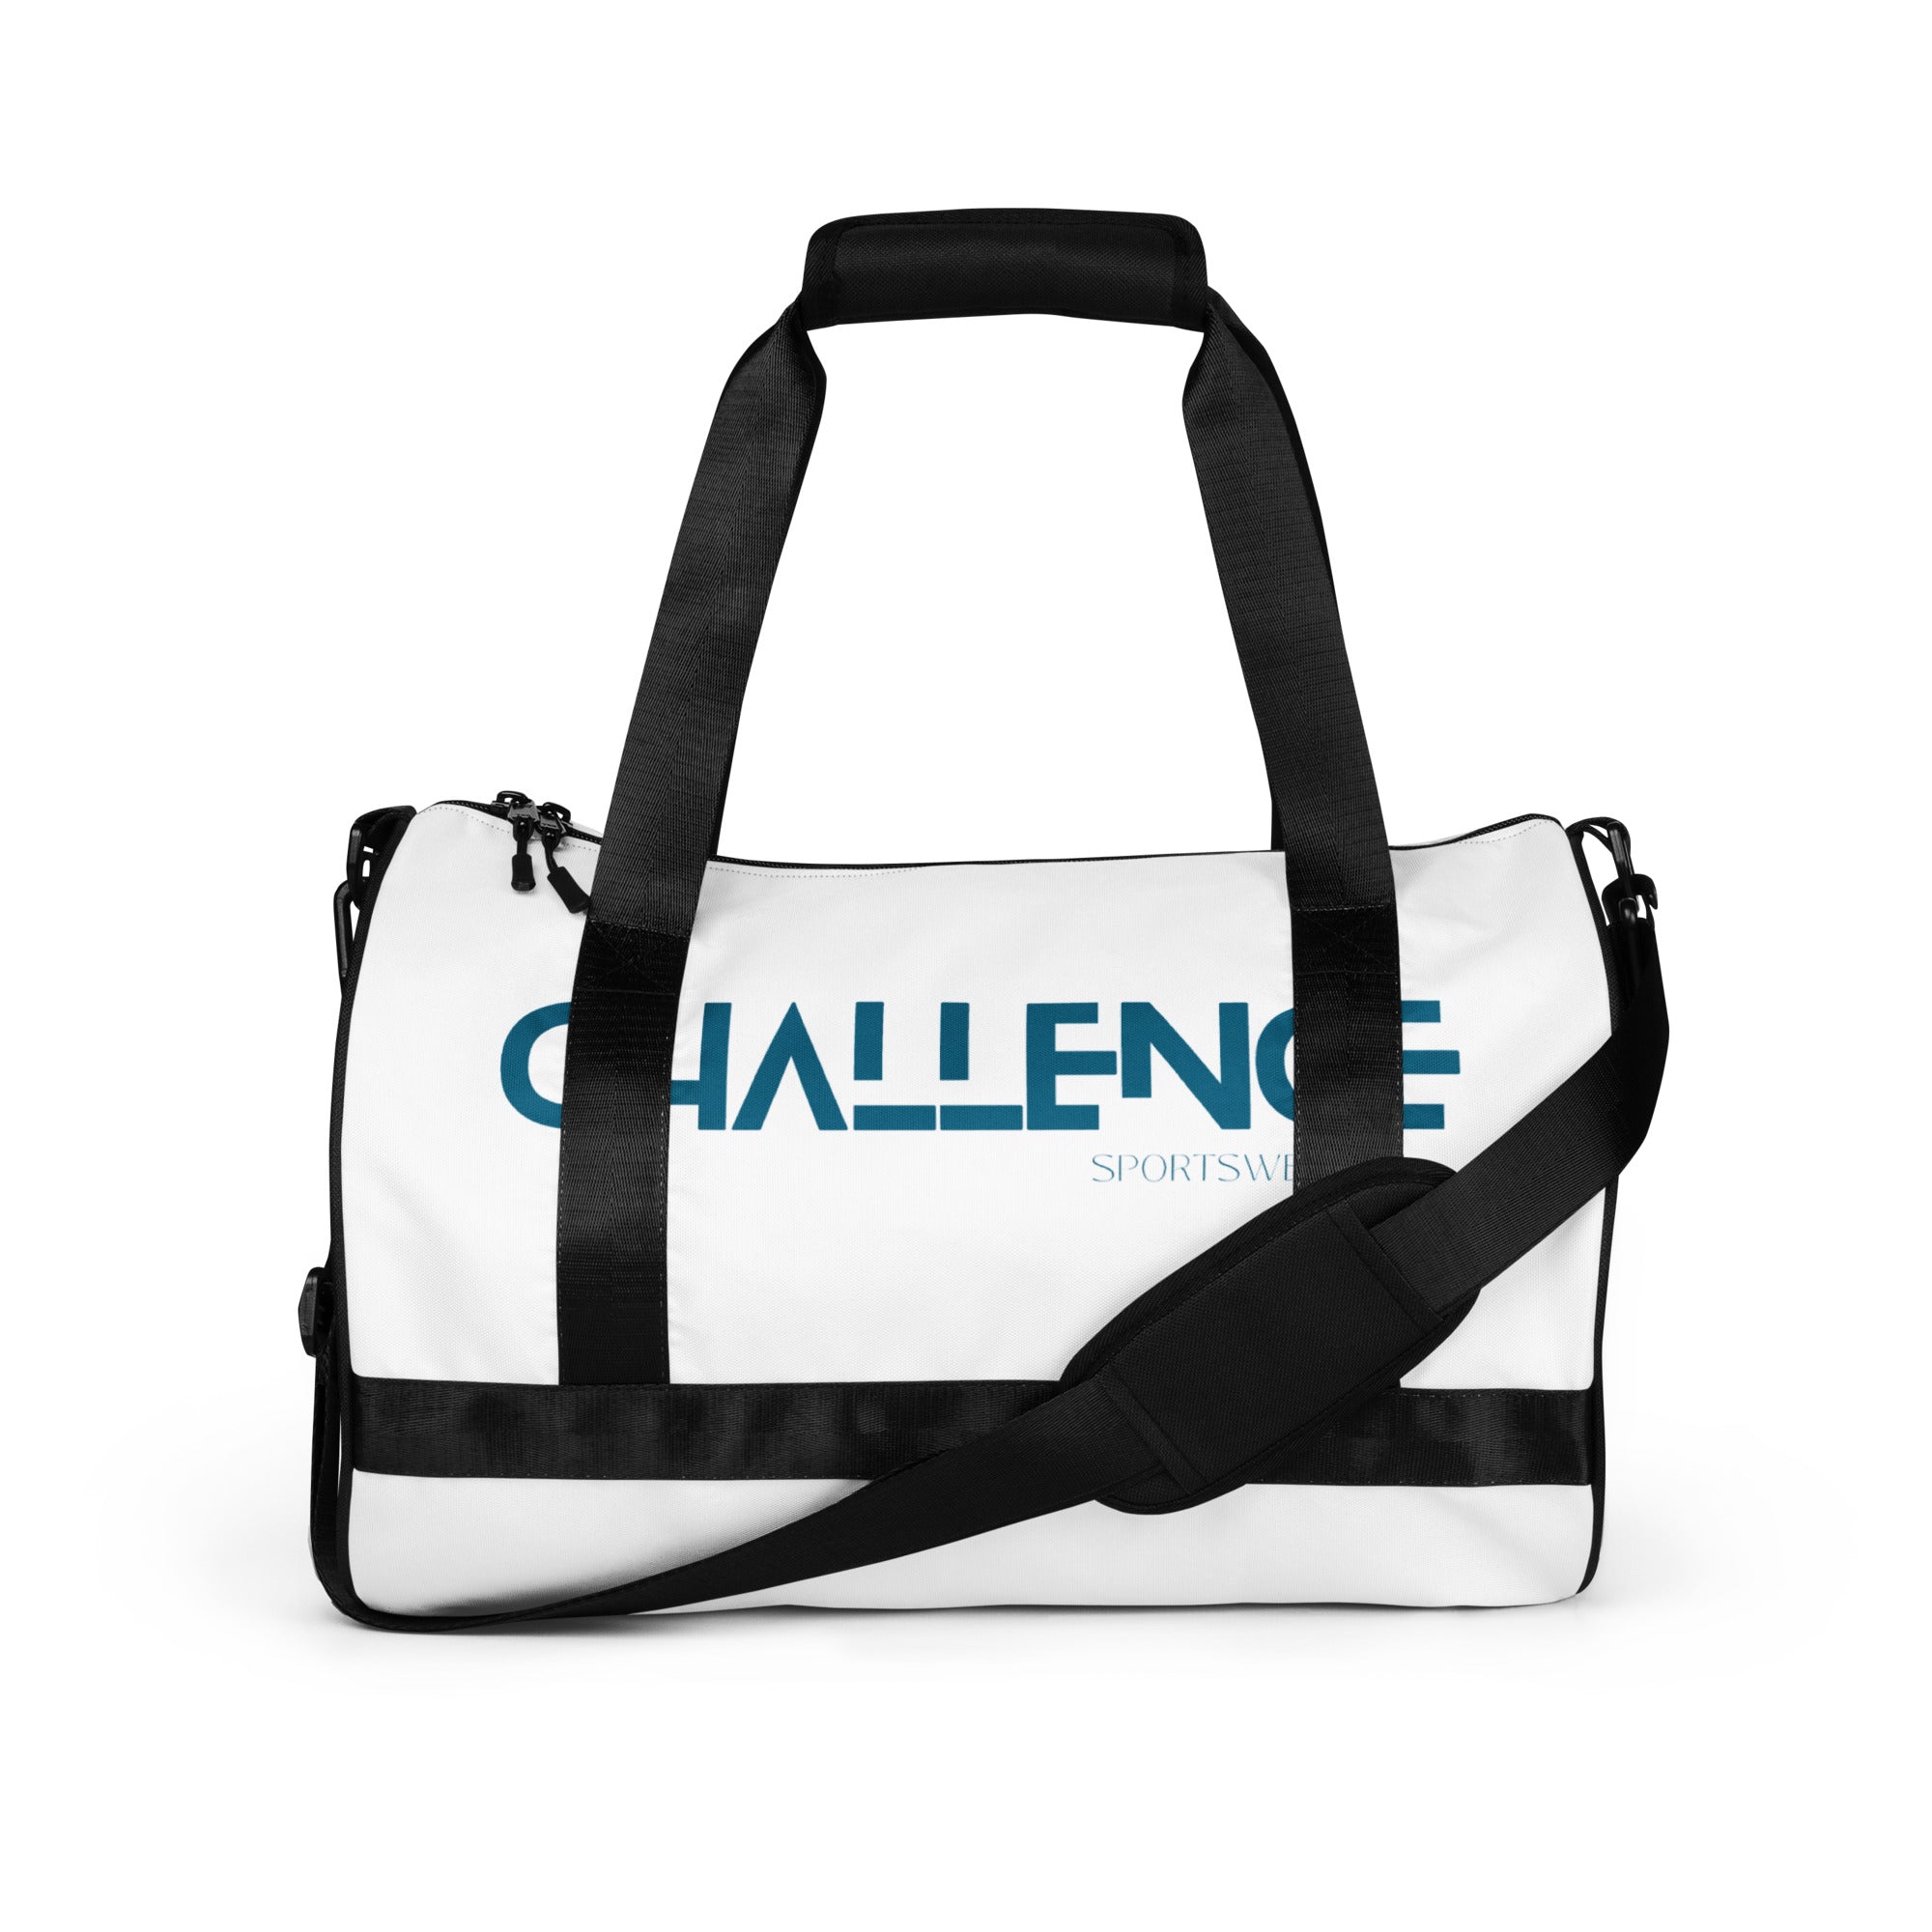 Challenge-sportswear - Gym bag